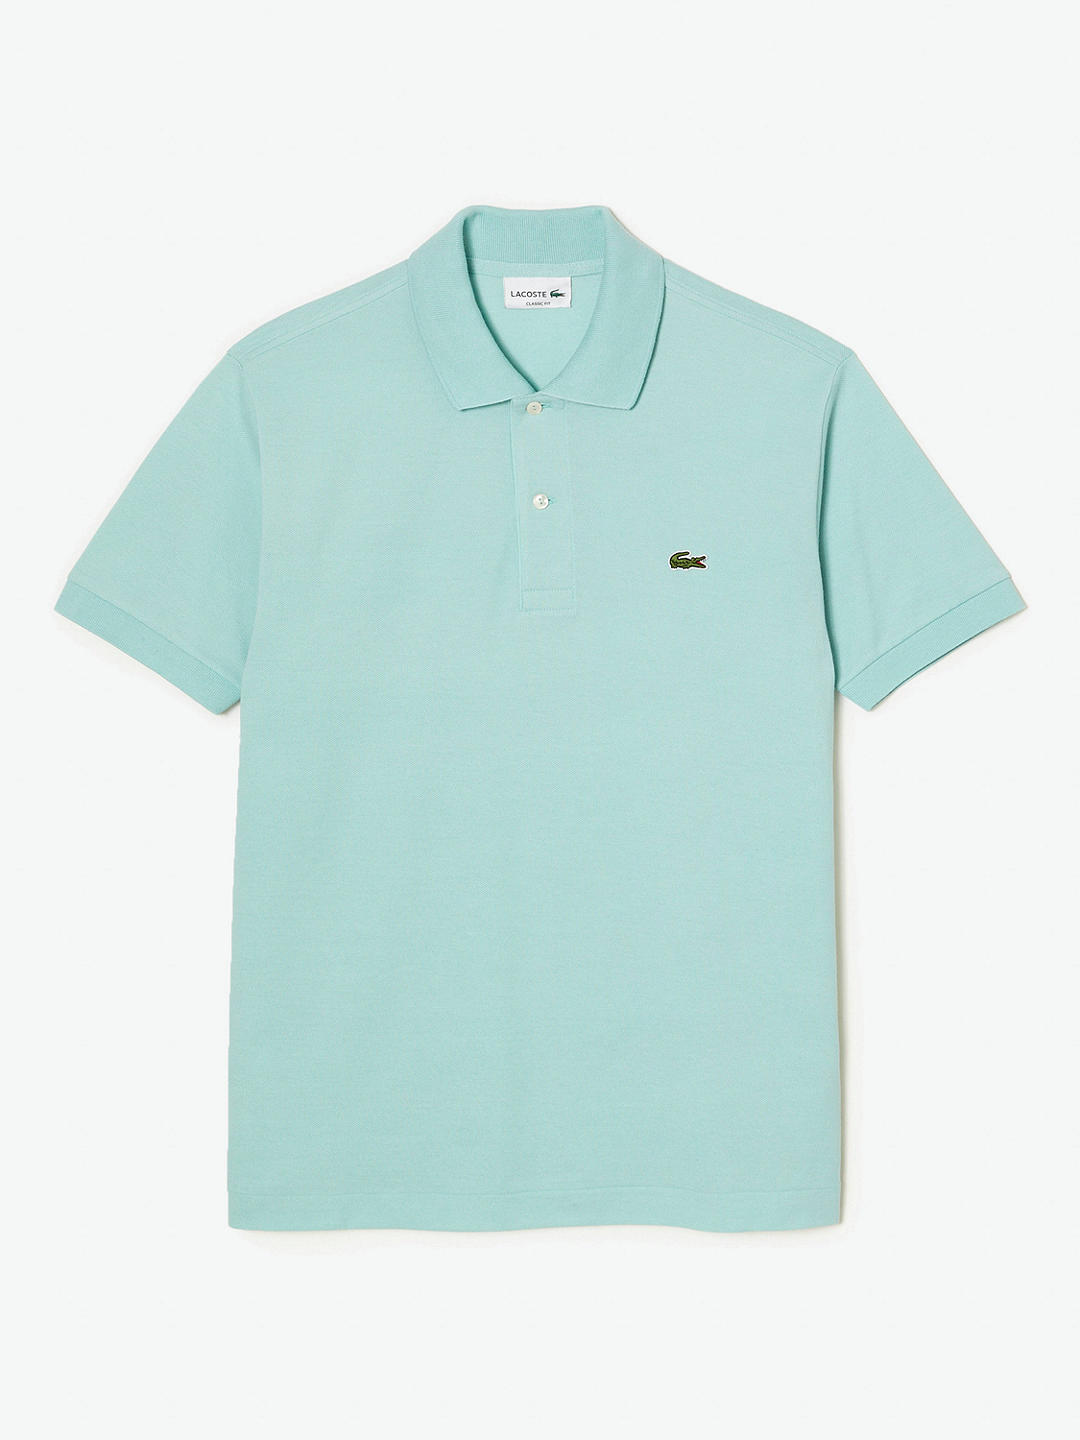 Lacoste L.12.12 Classic Regular Fit Short Sleeve Polo Shirt, Mint Green